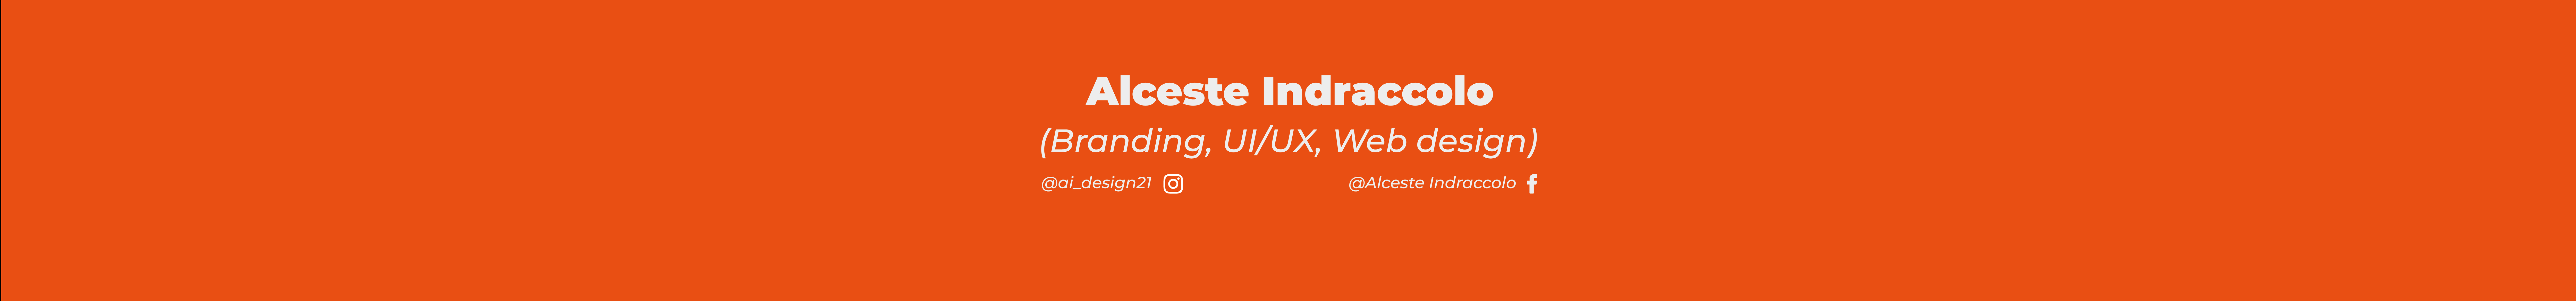 Banner de perfil de Alceste Indraccolo